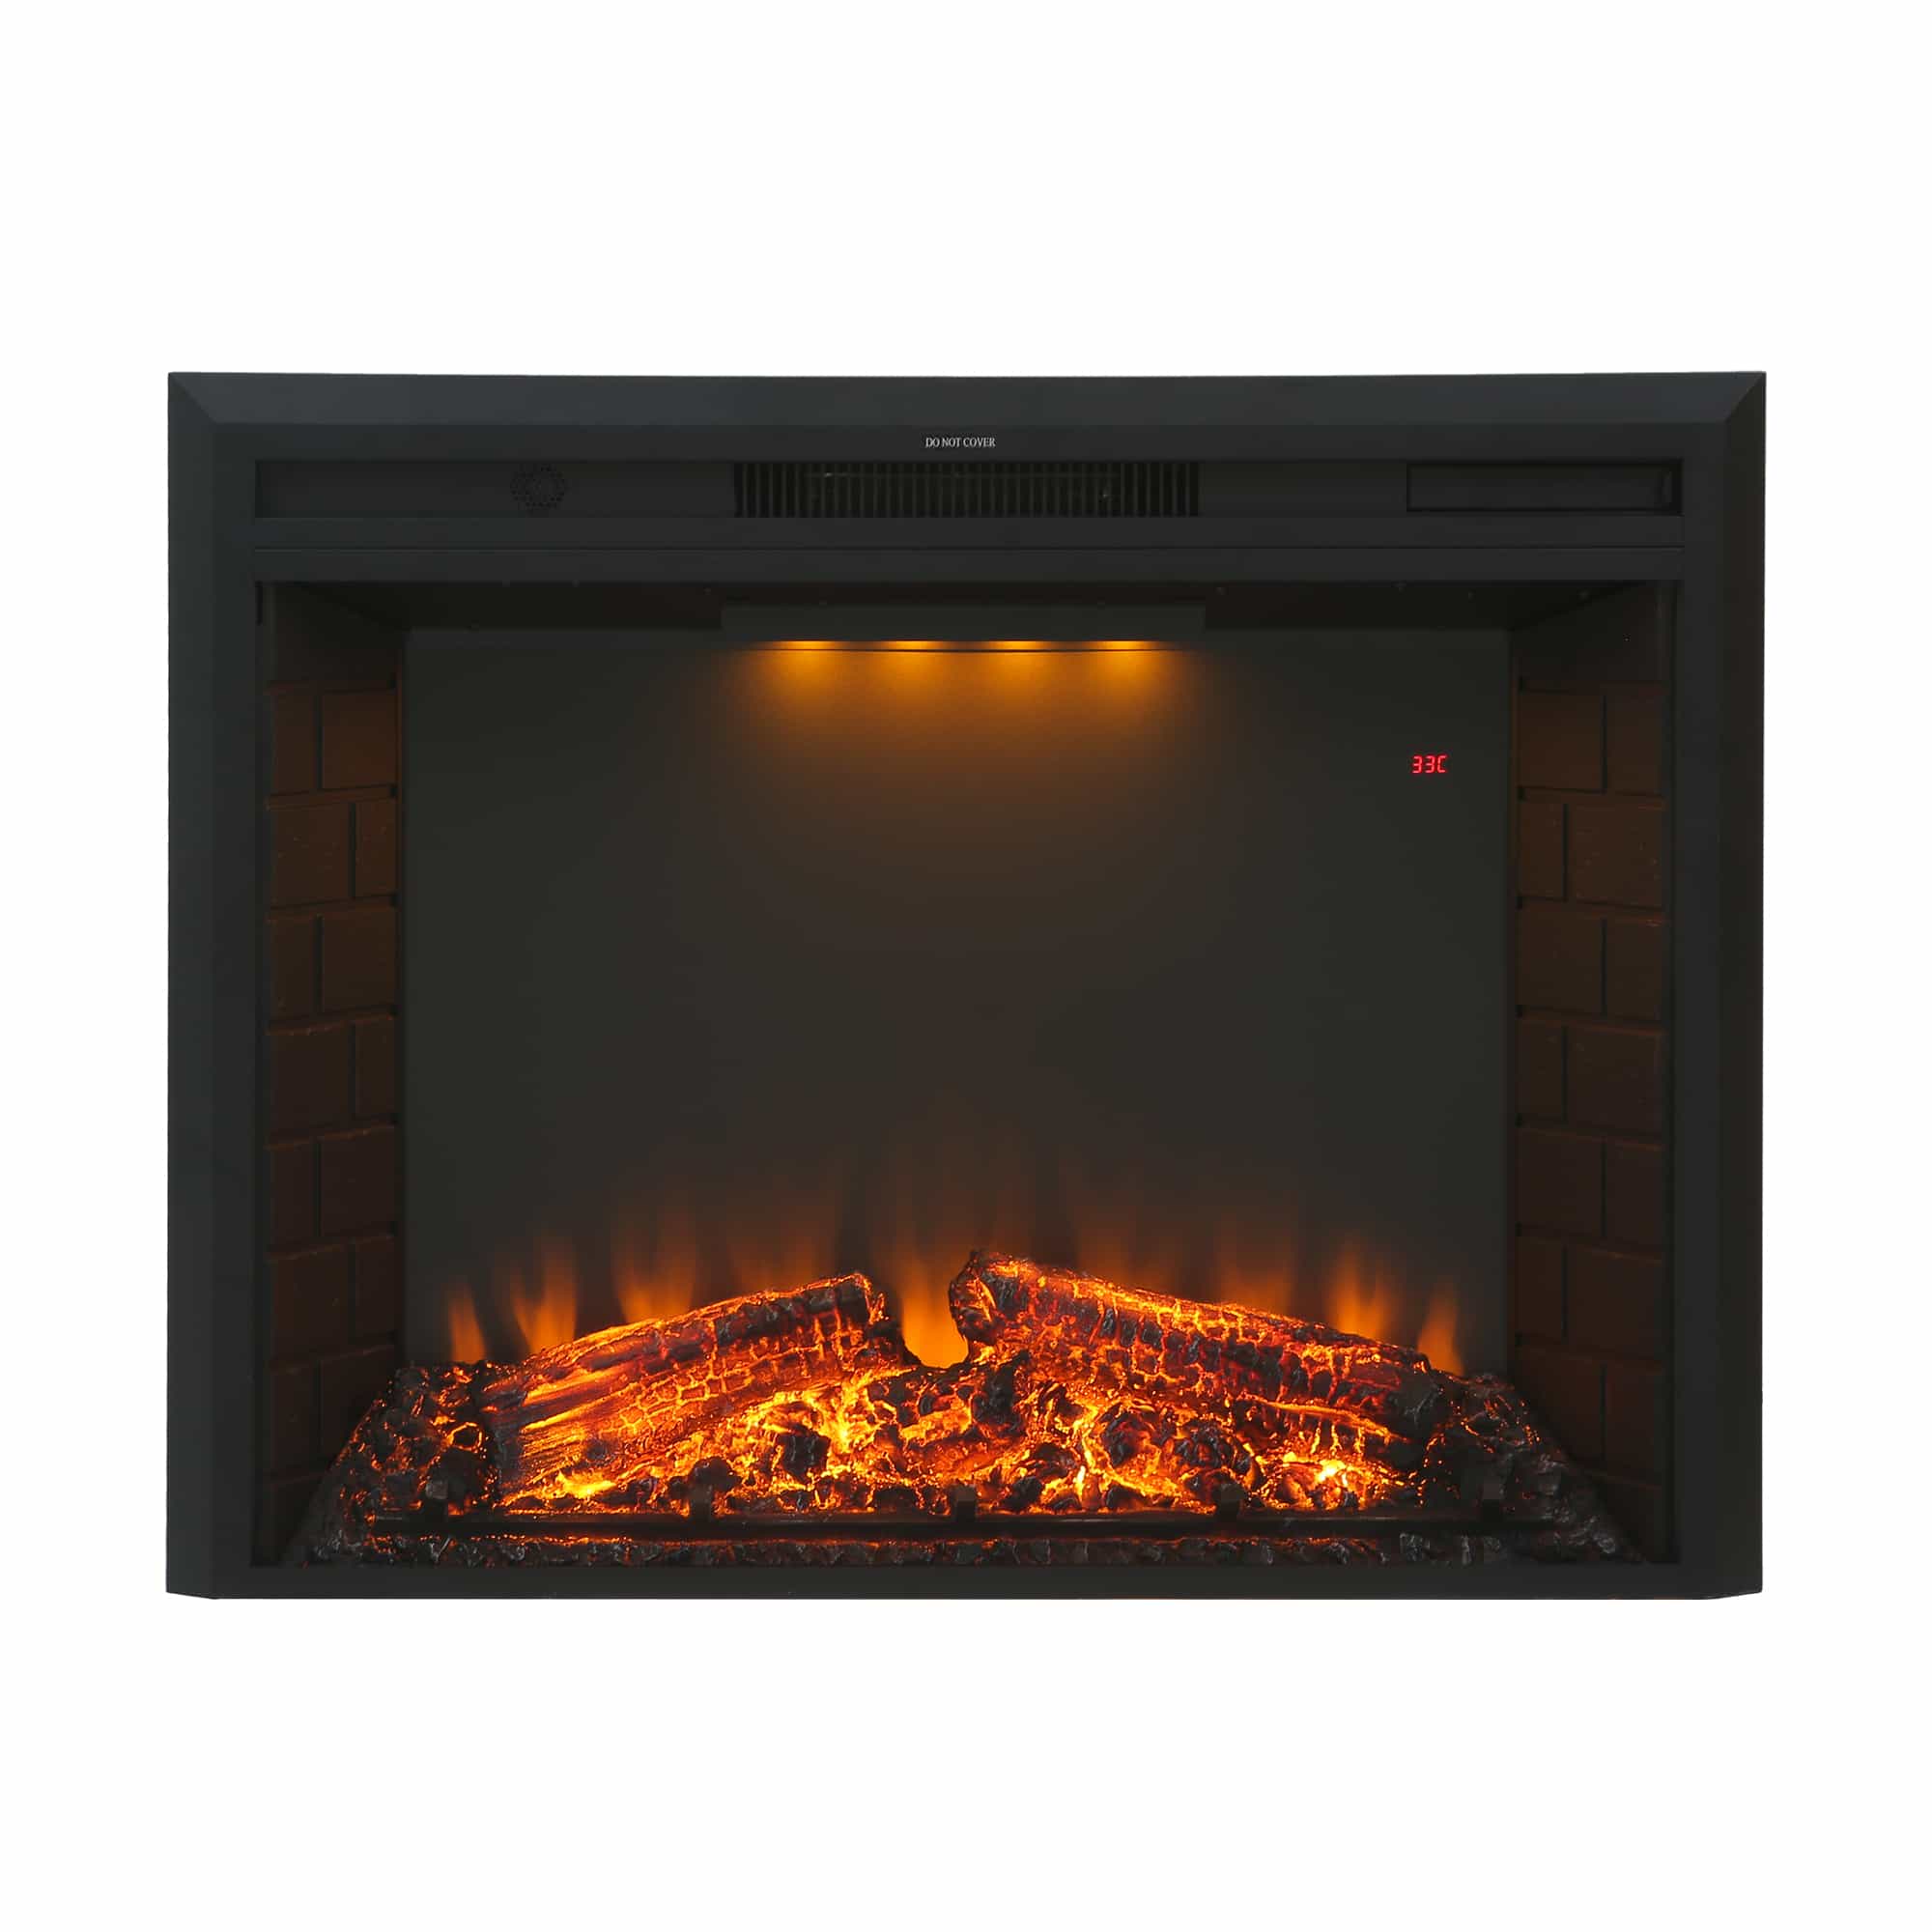 CASAINC 30.5 Inch LED Electric Fireplace Insert in Black-Casainc Canada